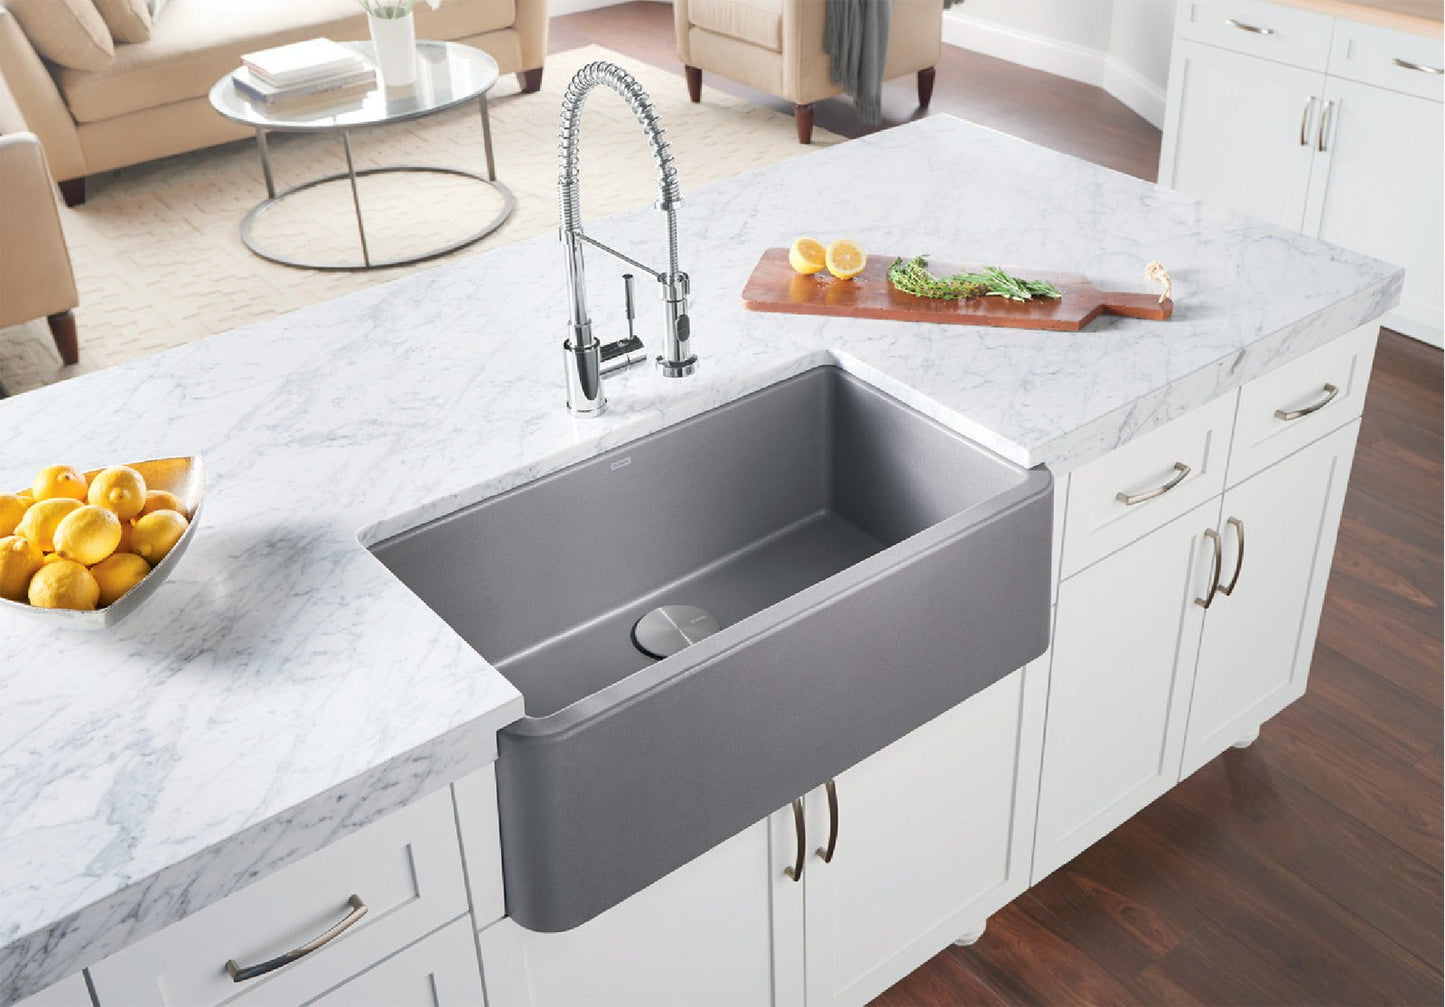 Blanco Ikon 33" Silgranit Apron Single Bowl Kitchen Sink